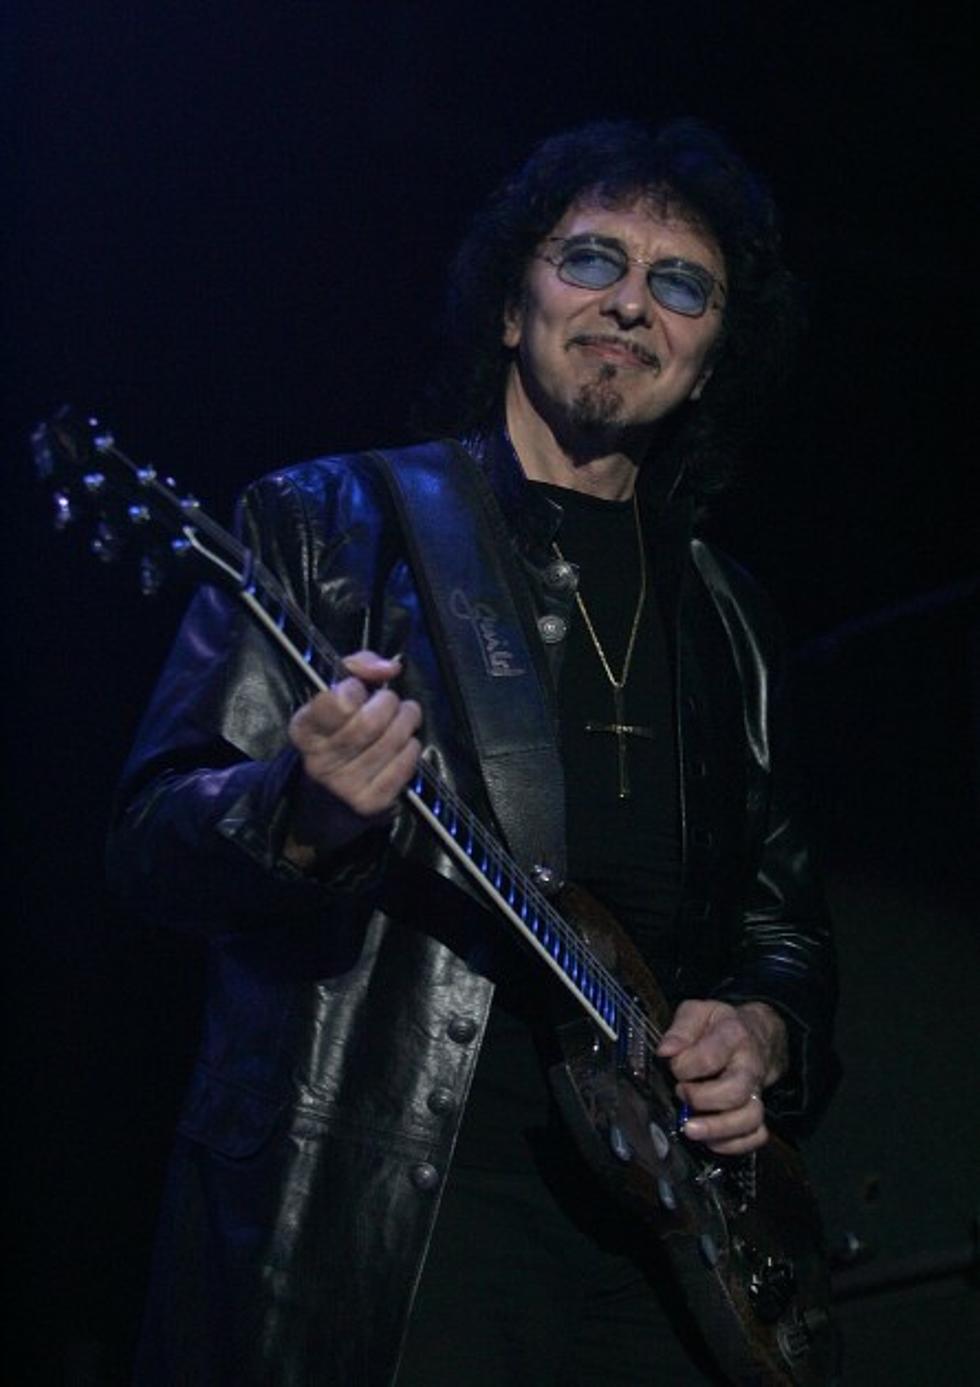 Thursday, Feb. 19: Happy Birthday Tony Iommi of Black Sabbath